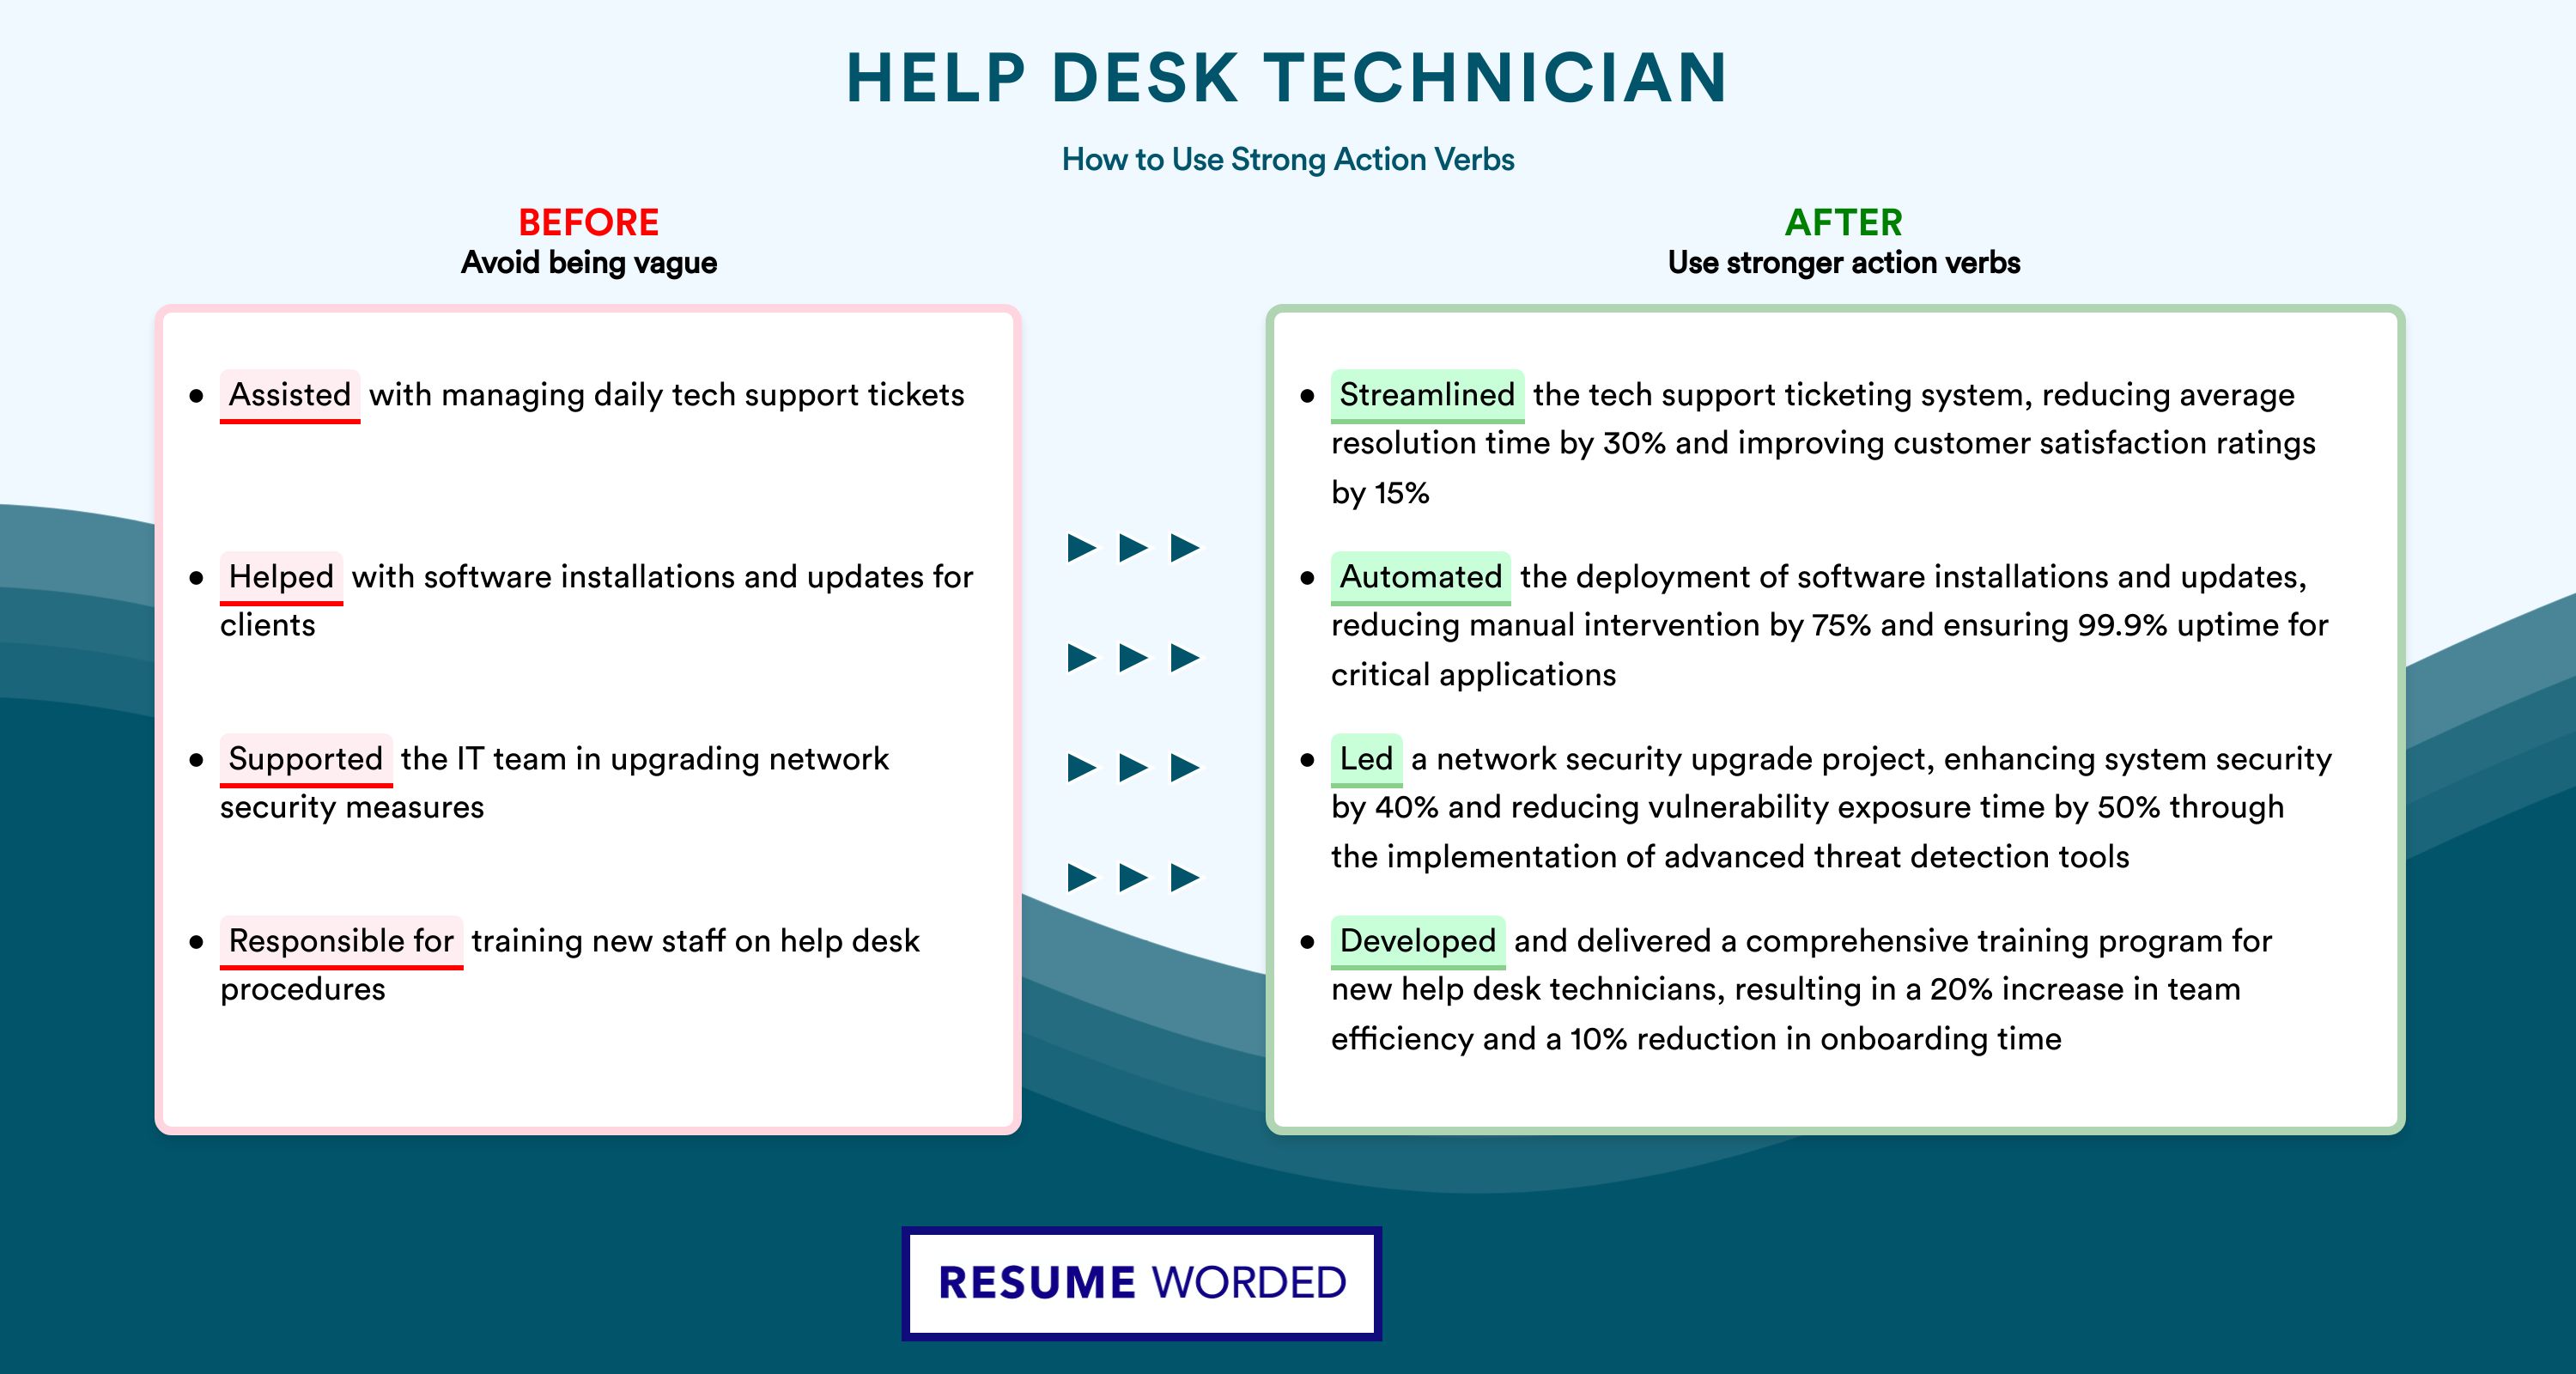 Action Verbs for Help Desk Technician